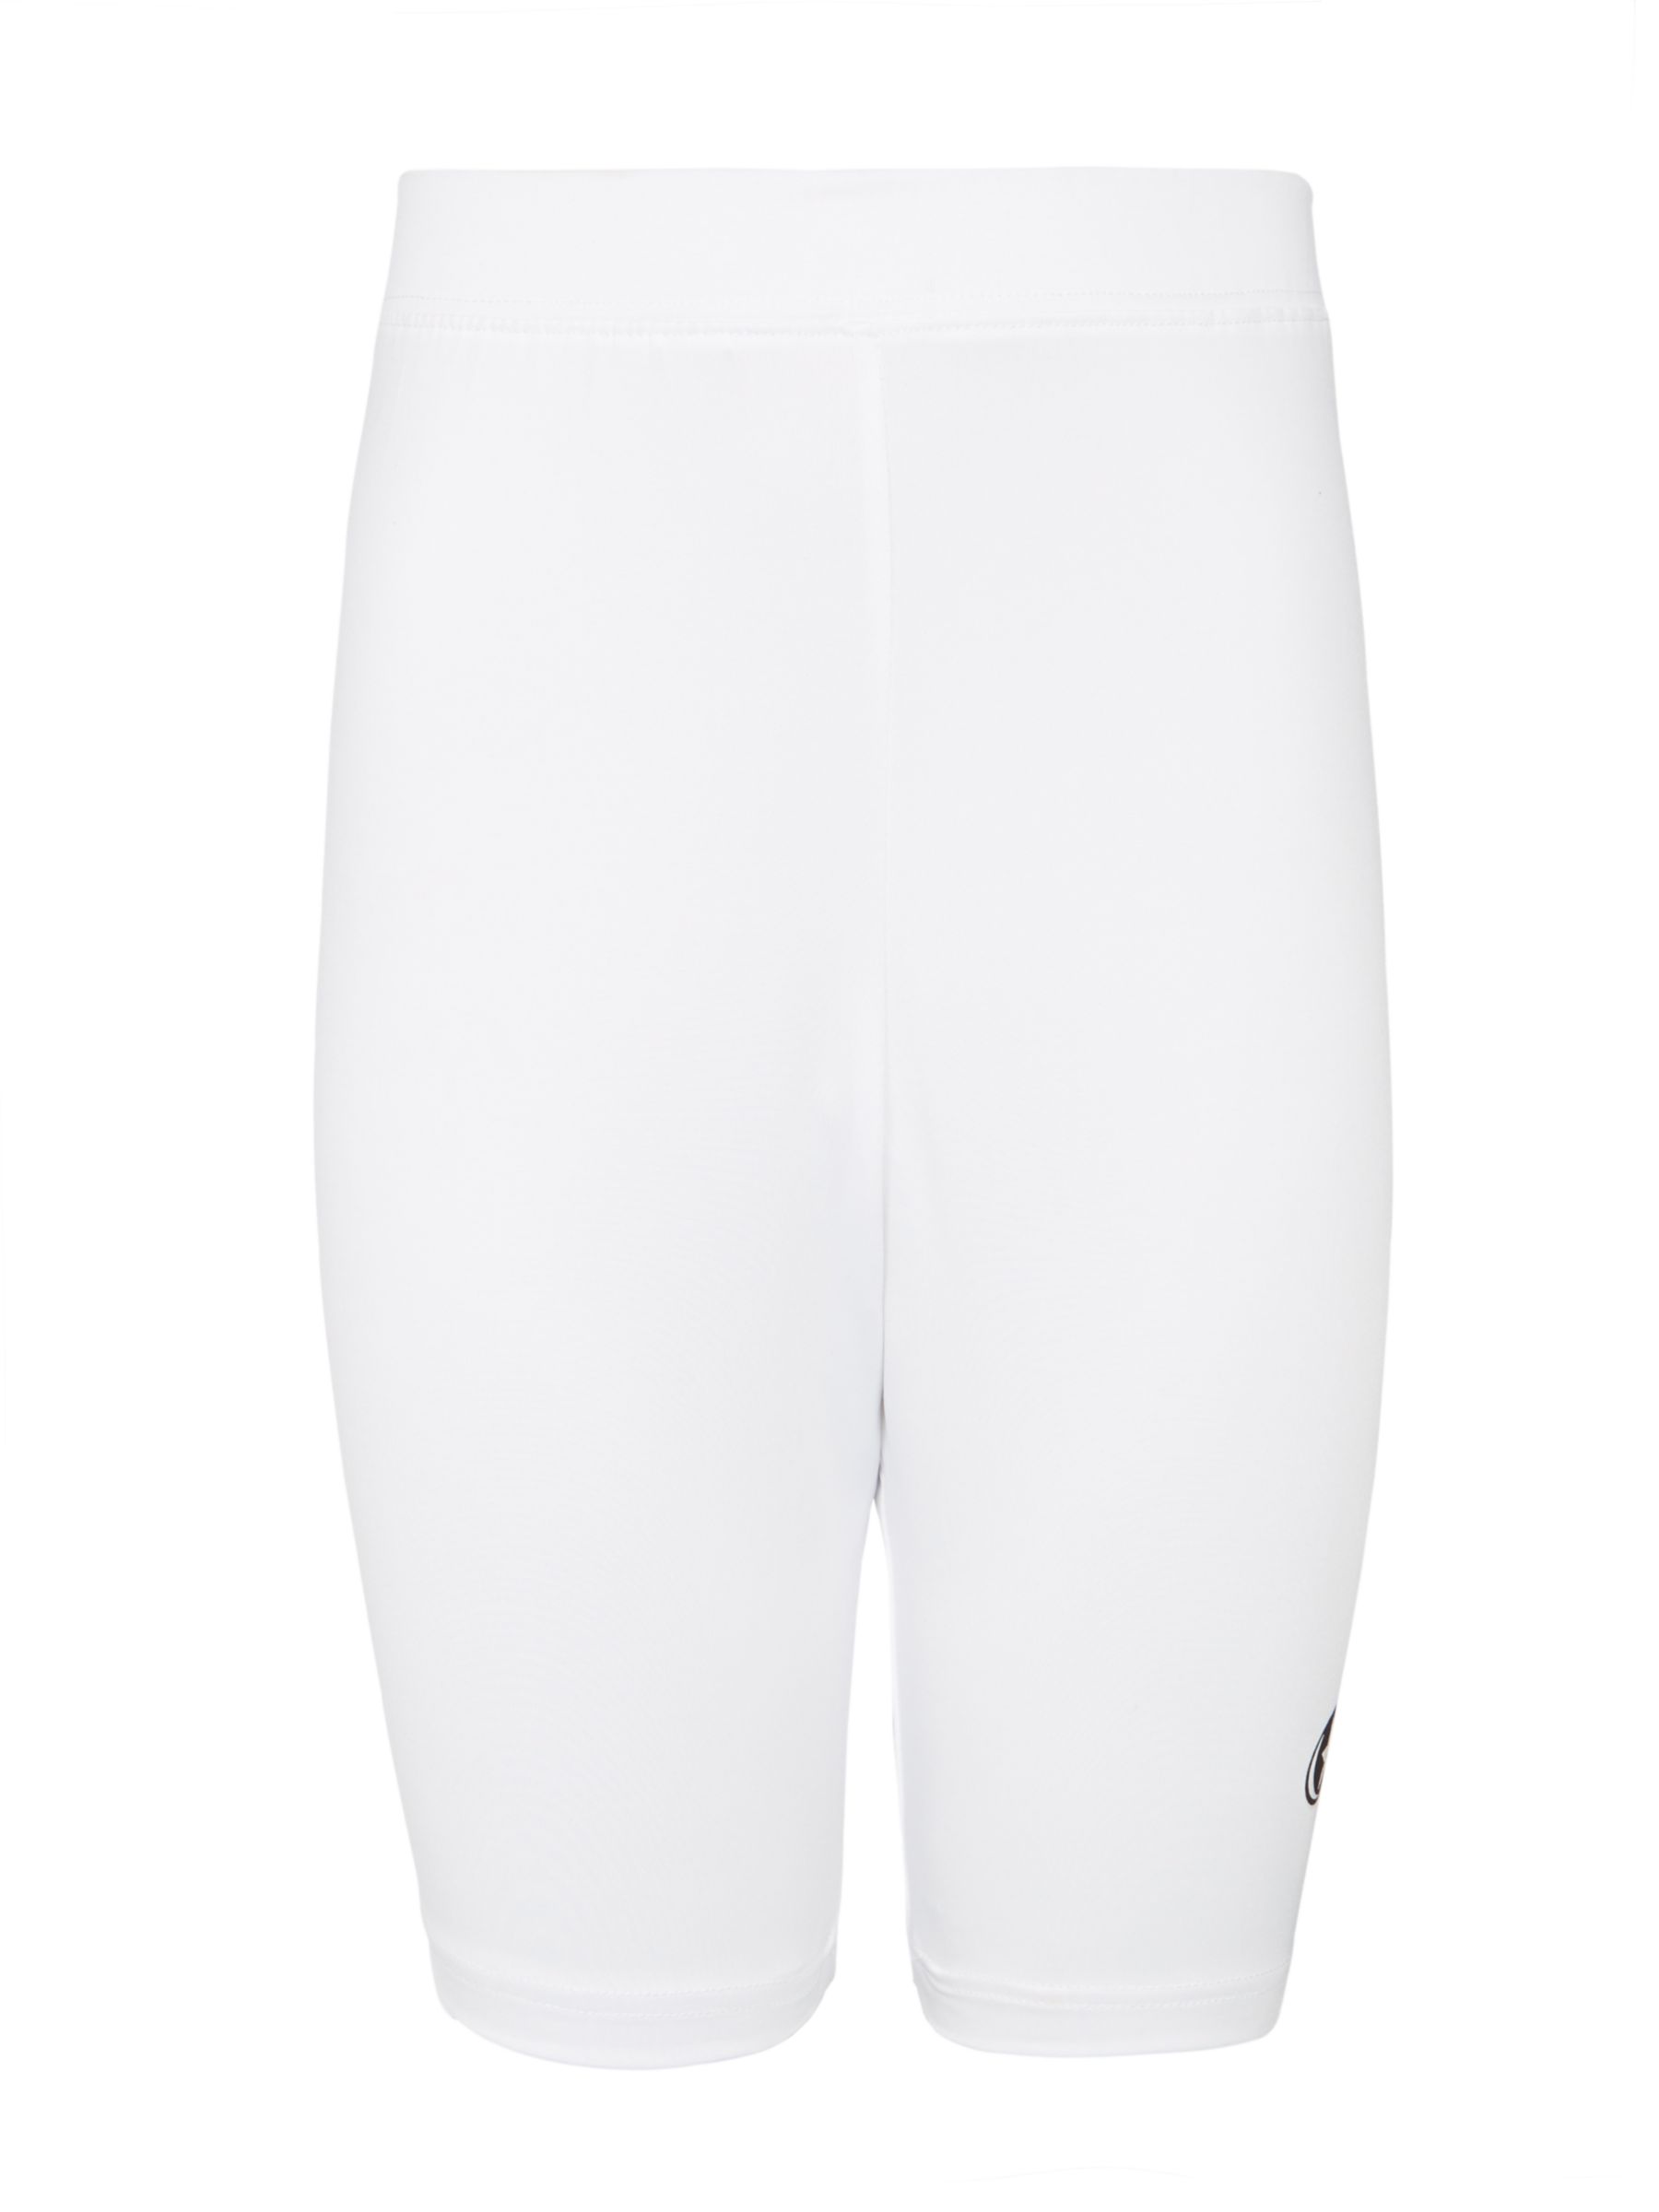 Highclare School Senior Unisex Baselayer Shorts, White